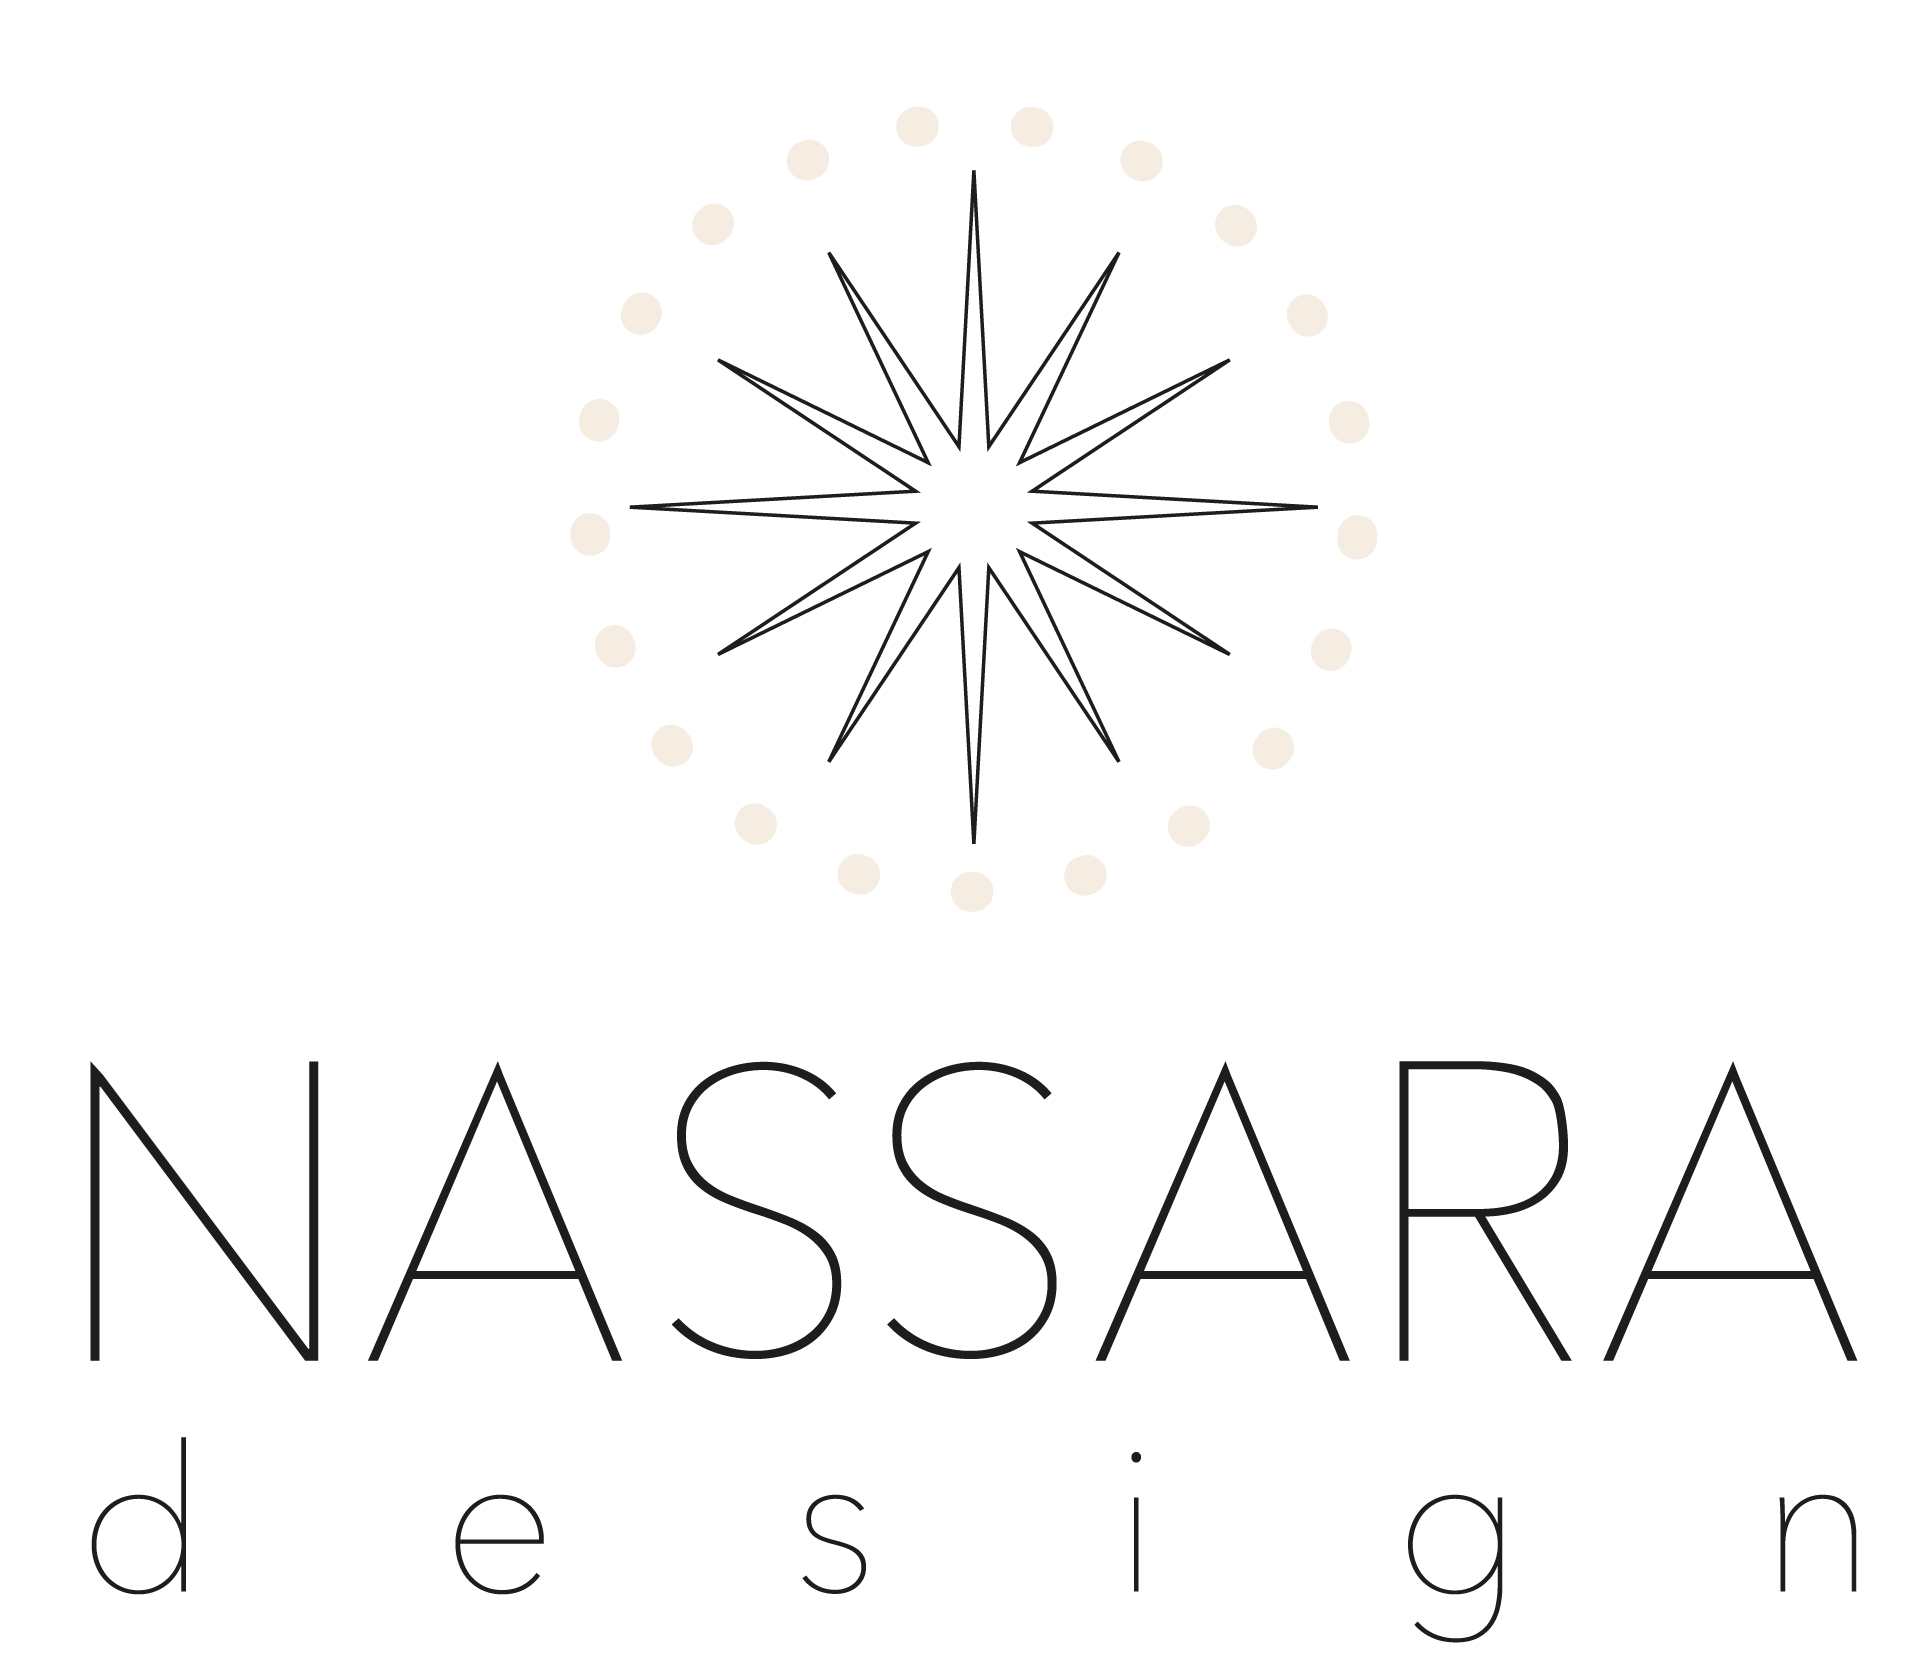 Nassara Design